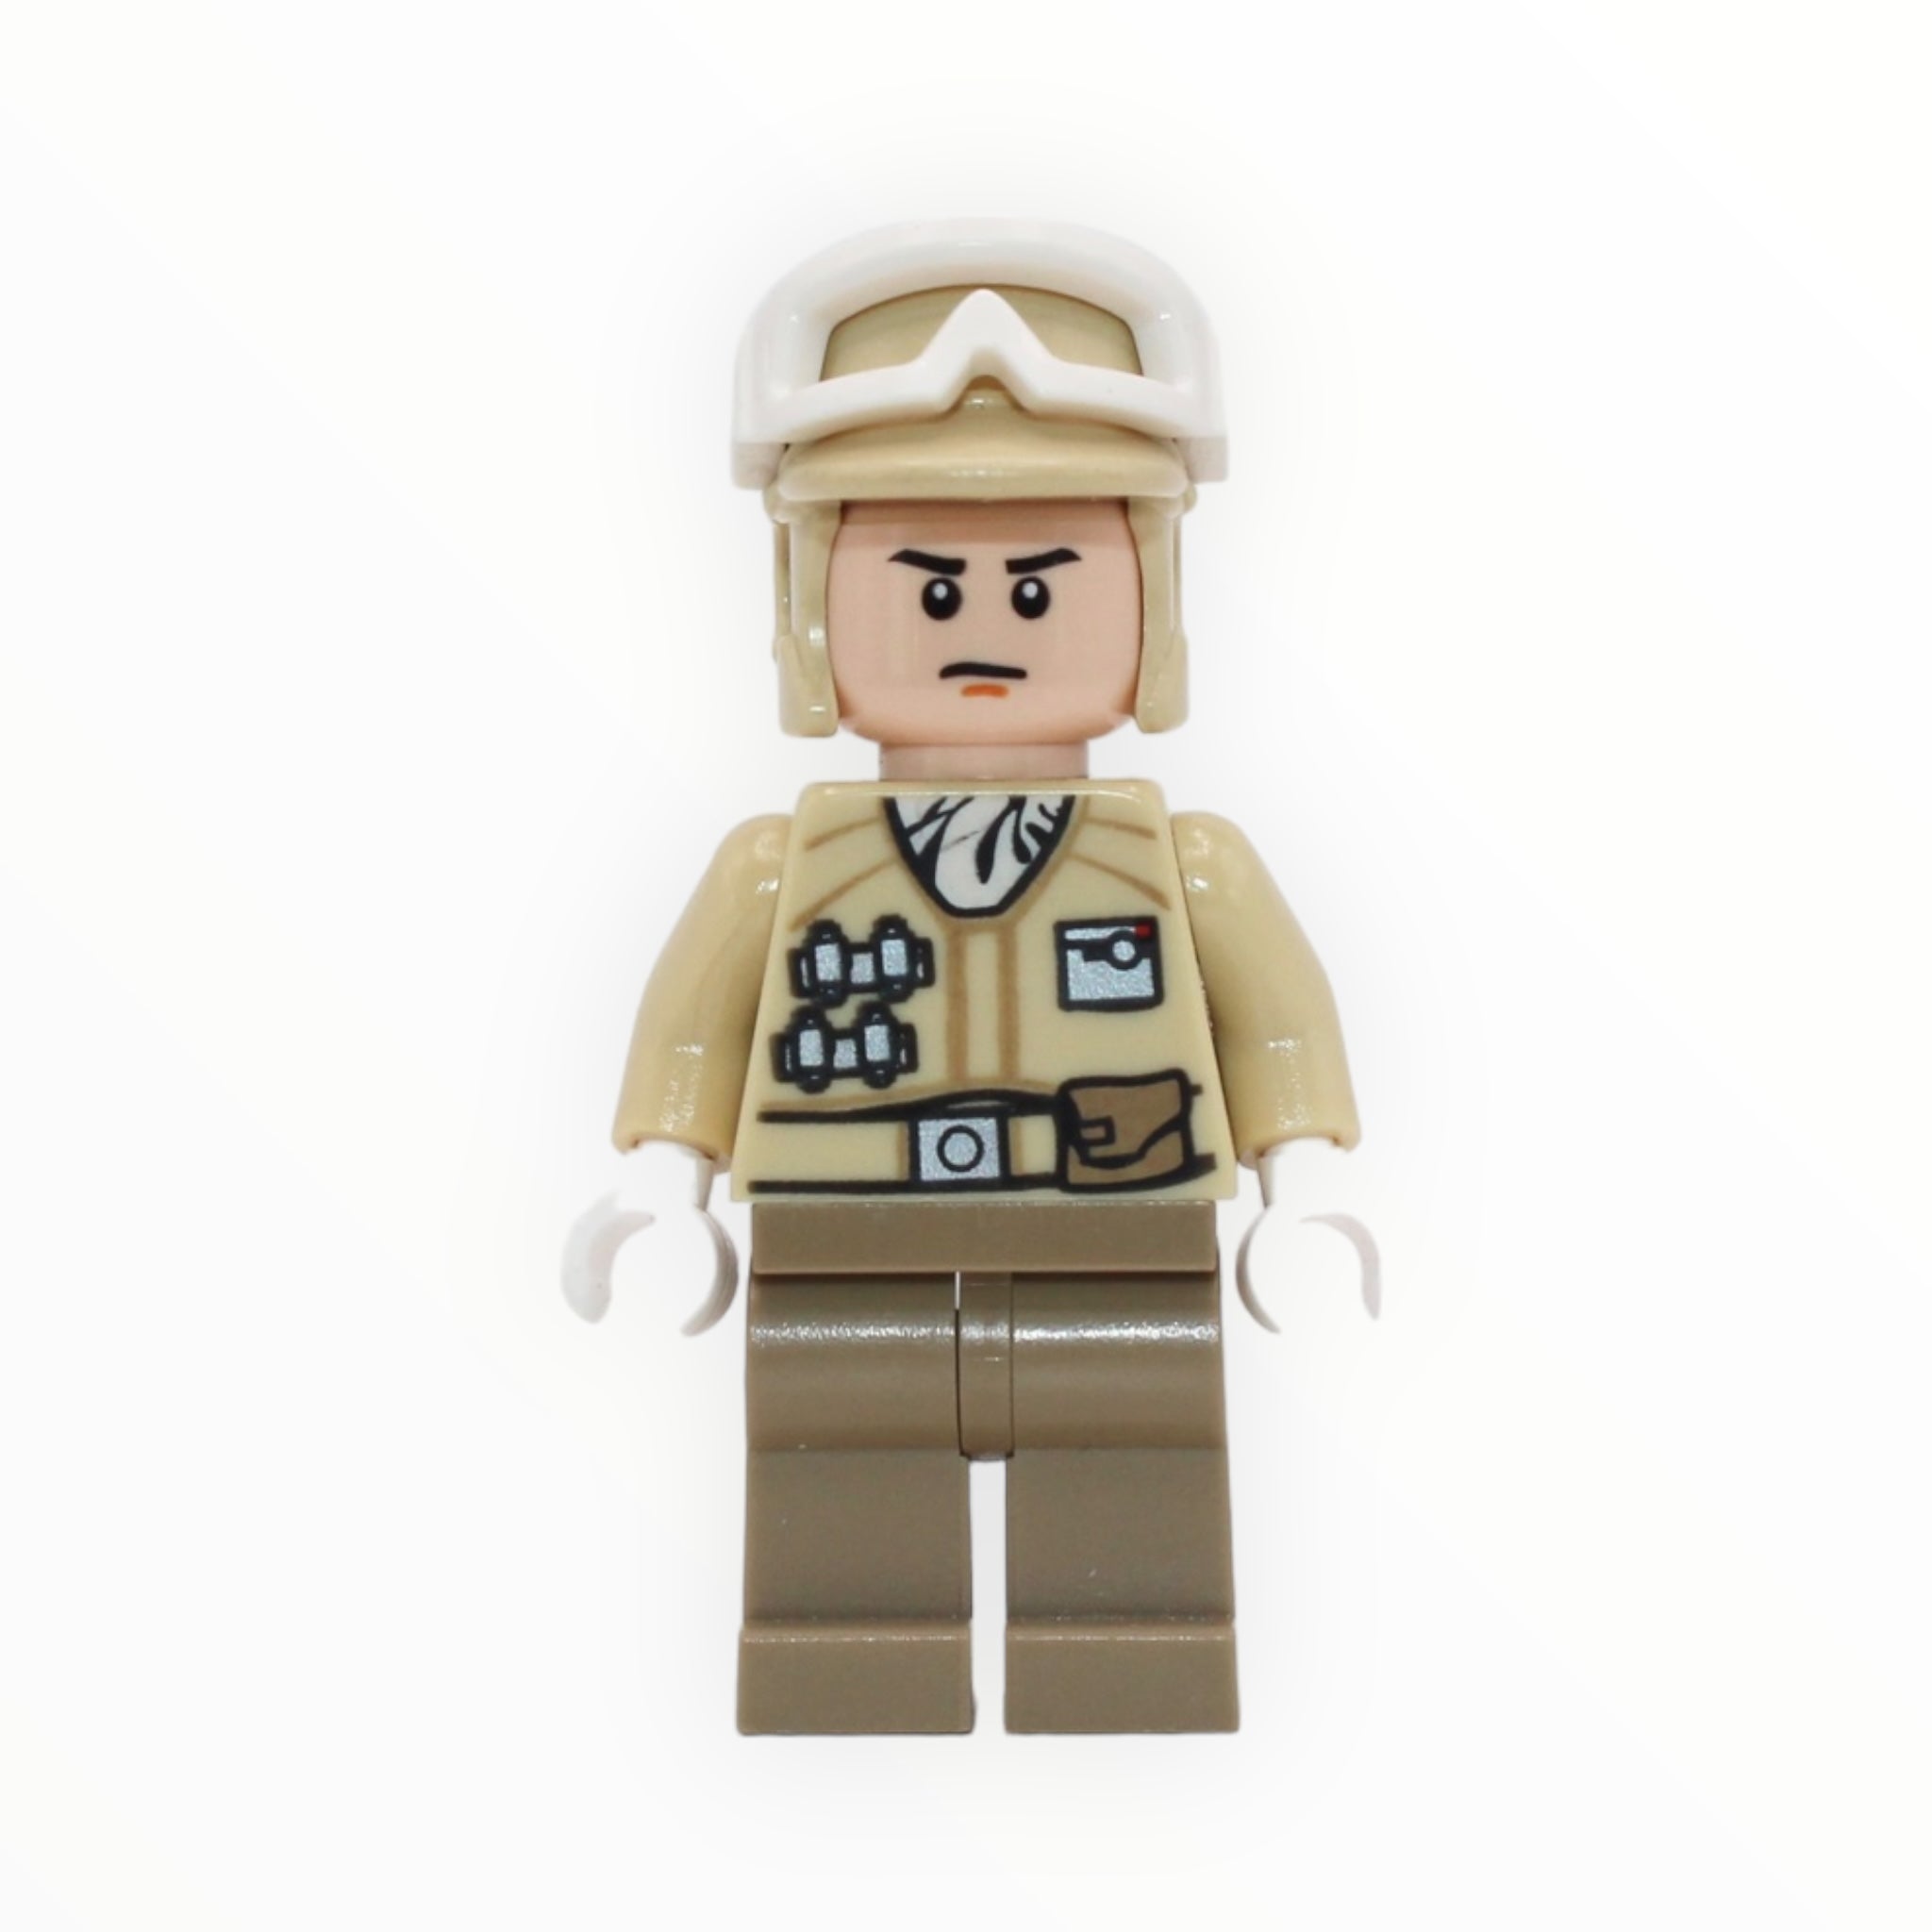 Hoth Rebel Trooper (tan uniform, frown, orange chin dimple, 2010)